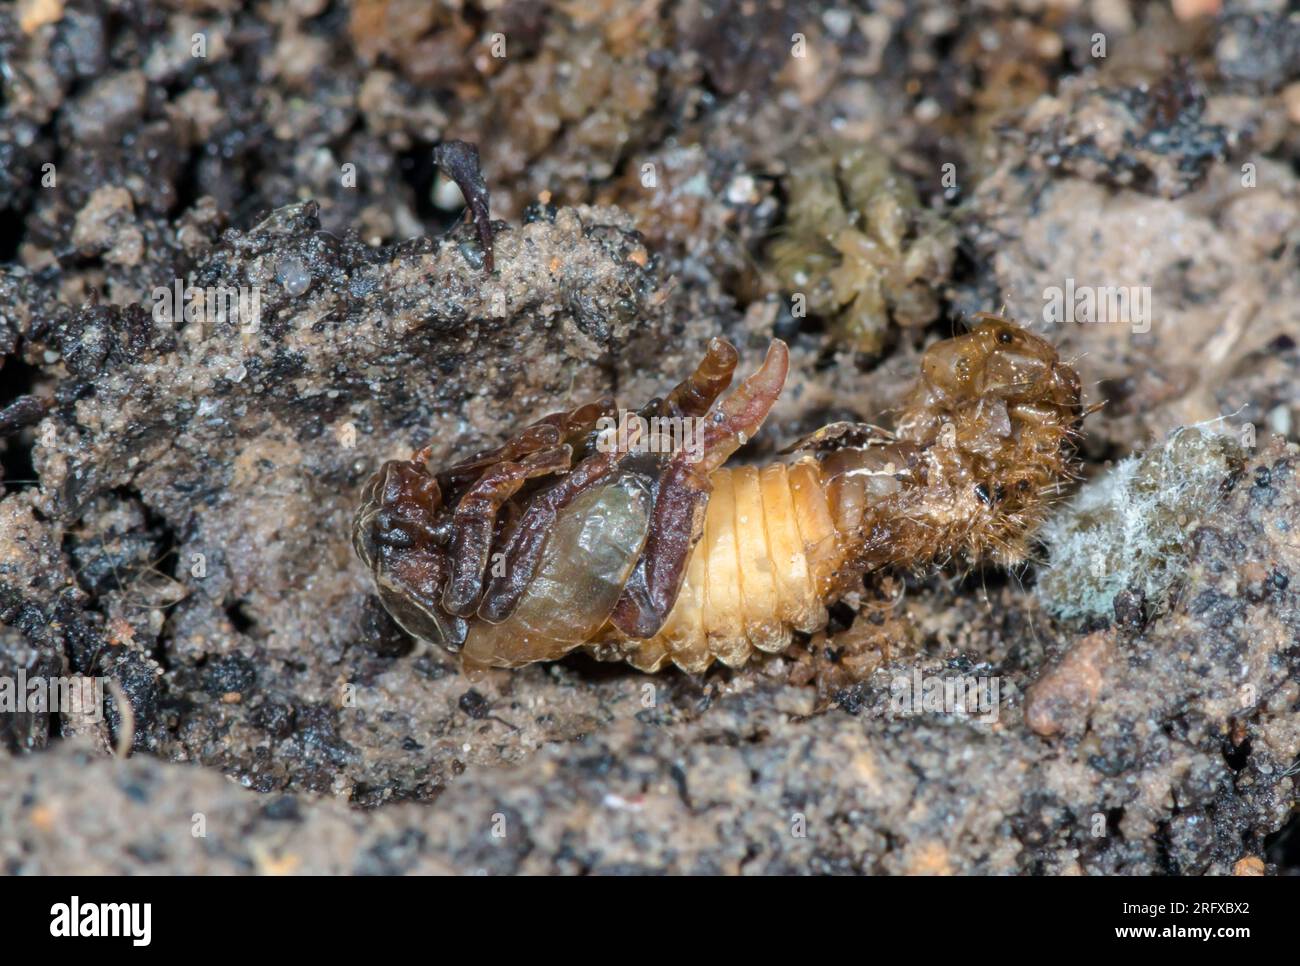 Welsh Chafer Beetle Pupa nearing Eclosure (Hoplia philanthus), Scarabaeidae. Sussex, UK Stock Photo